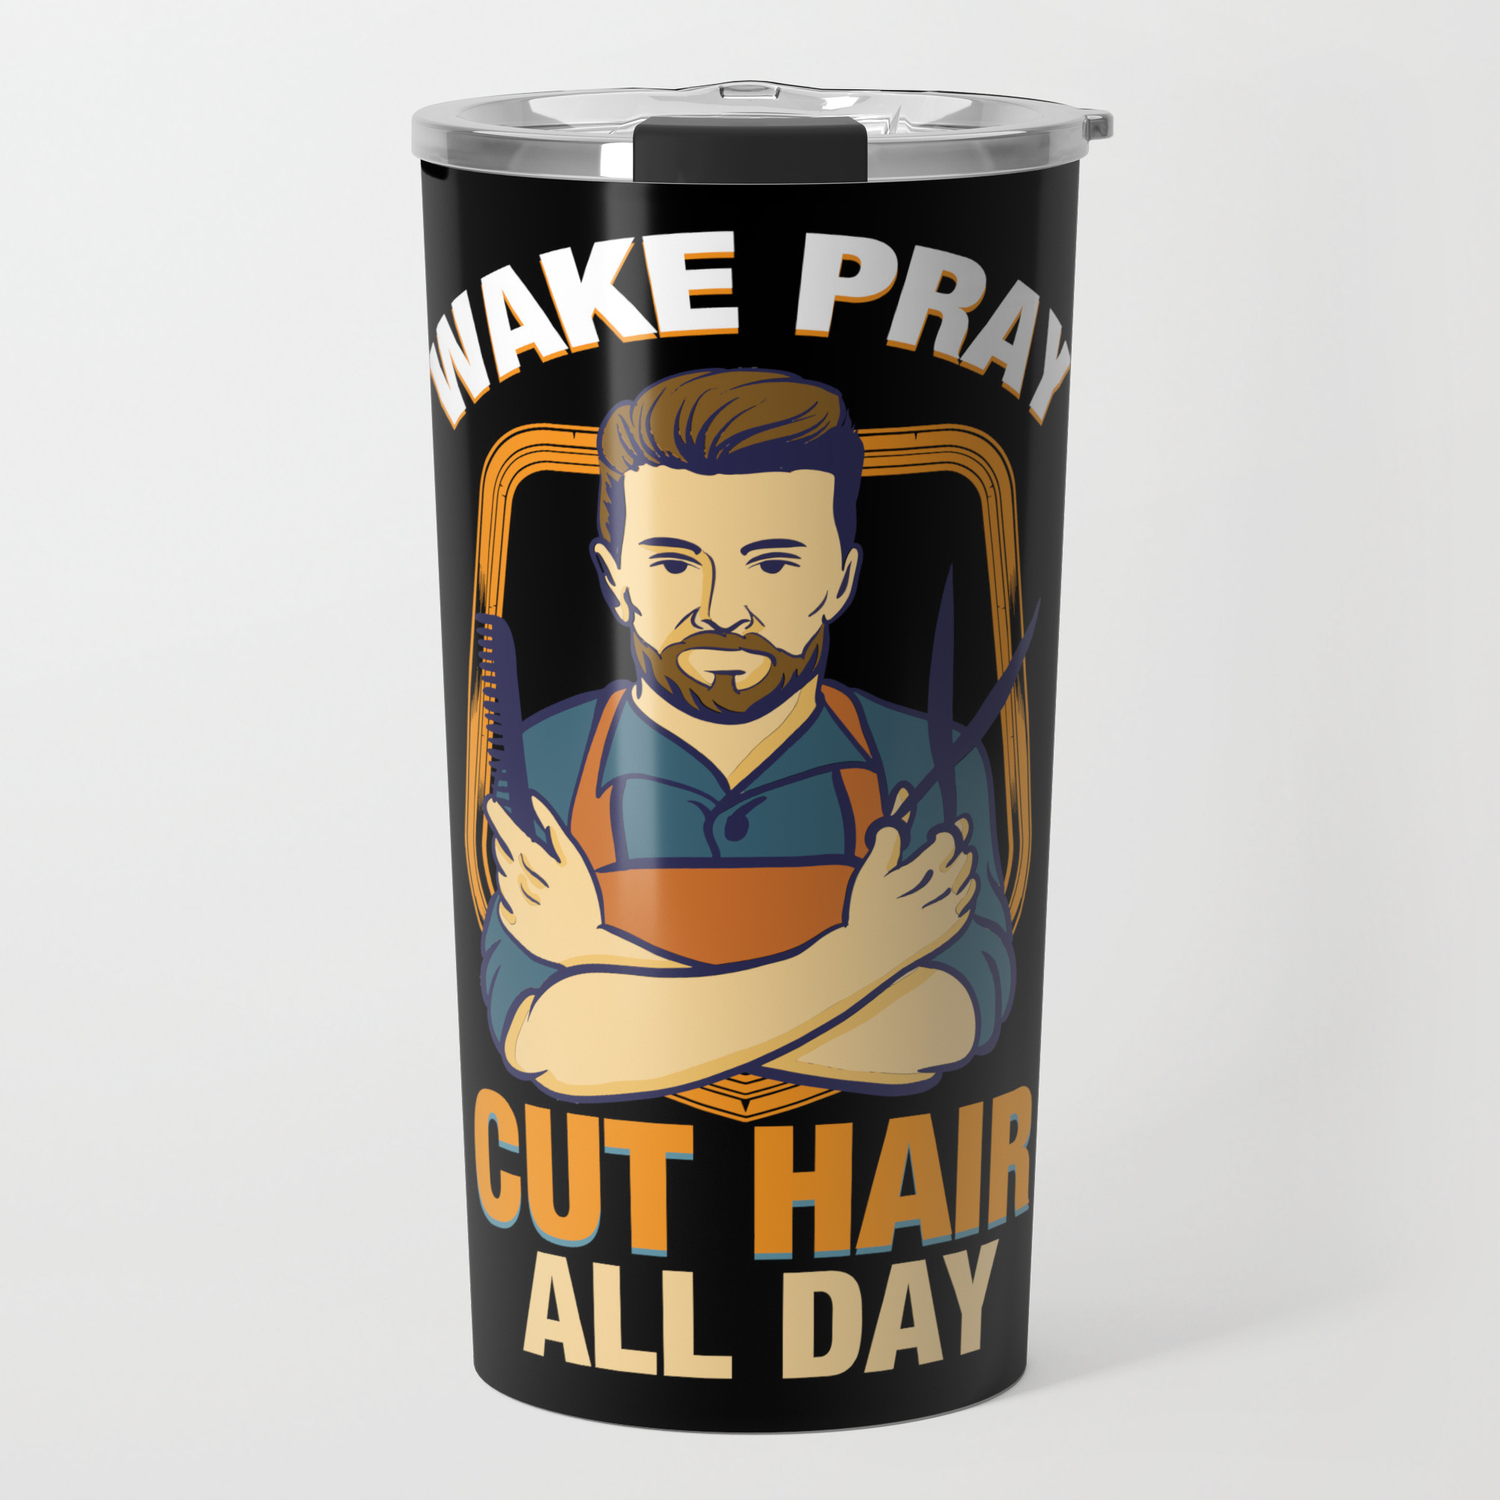 Wake Pray Cut Hair All Day - Funny